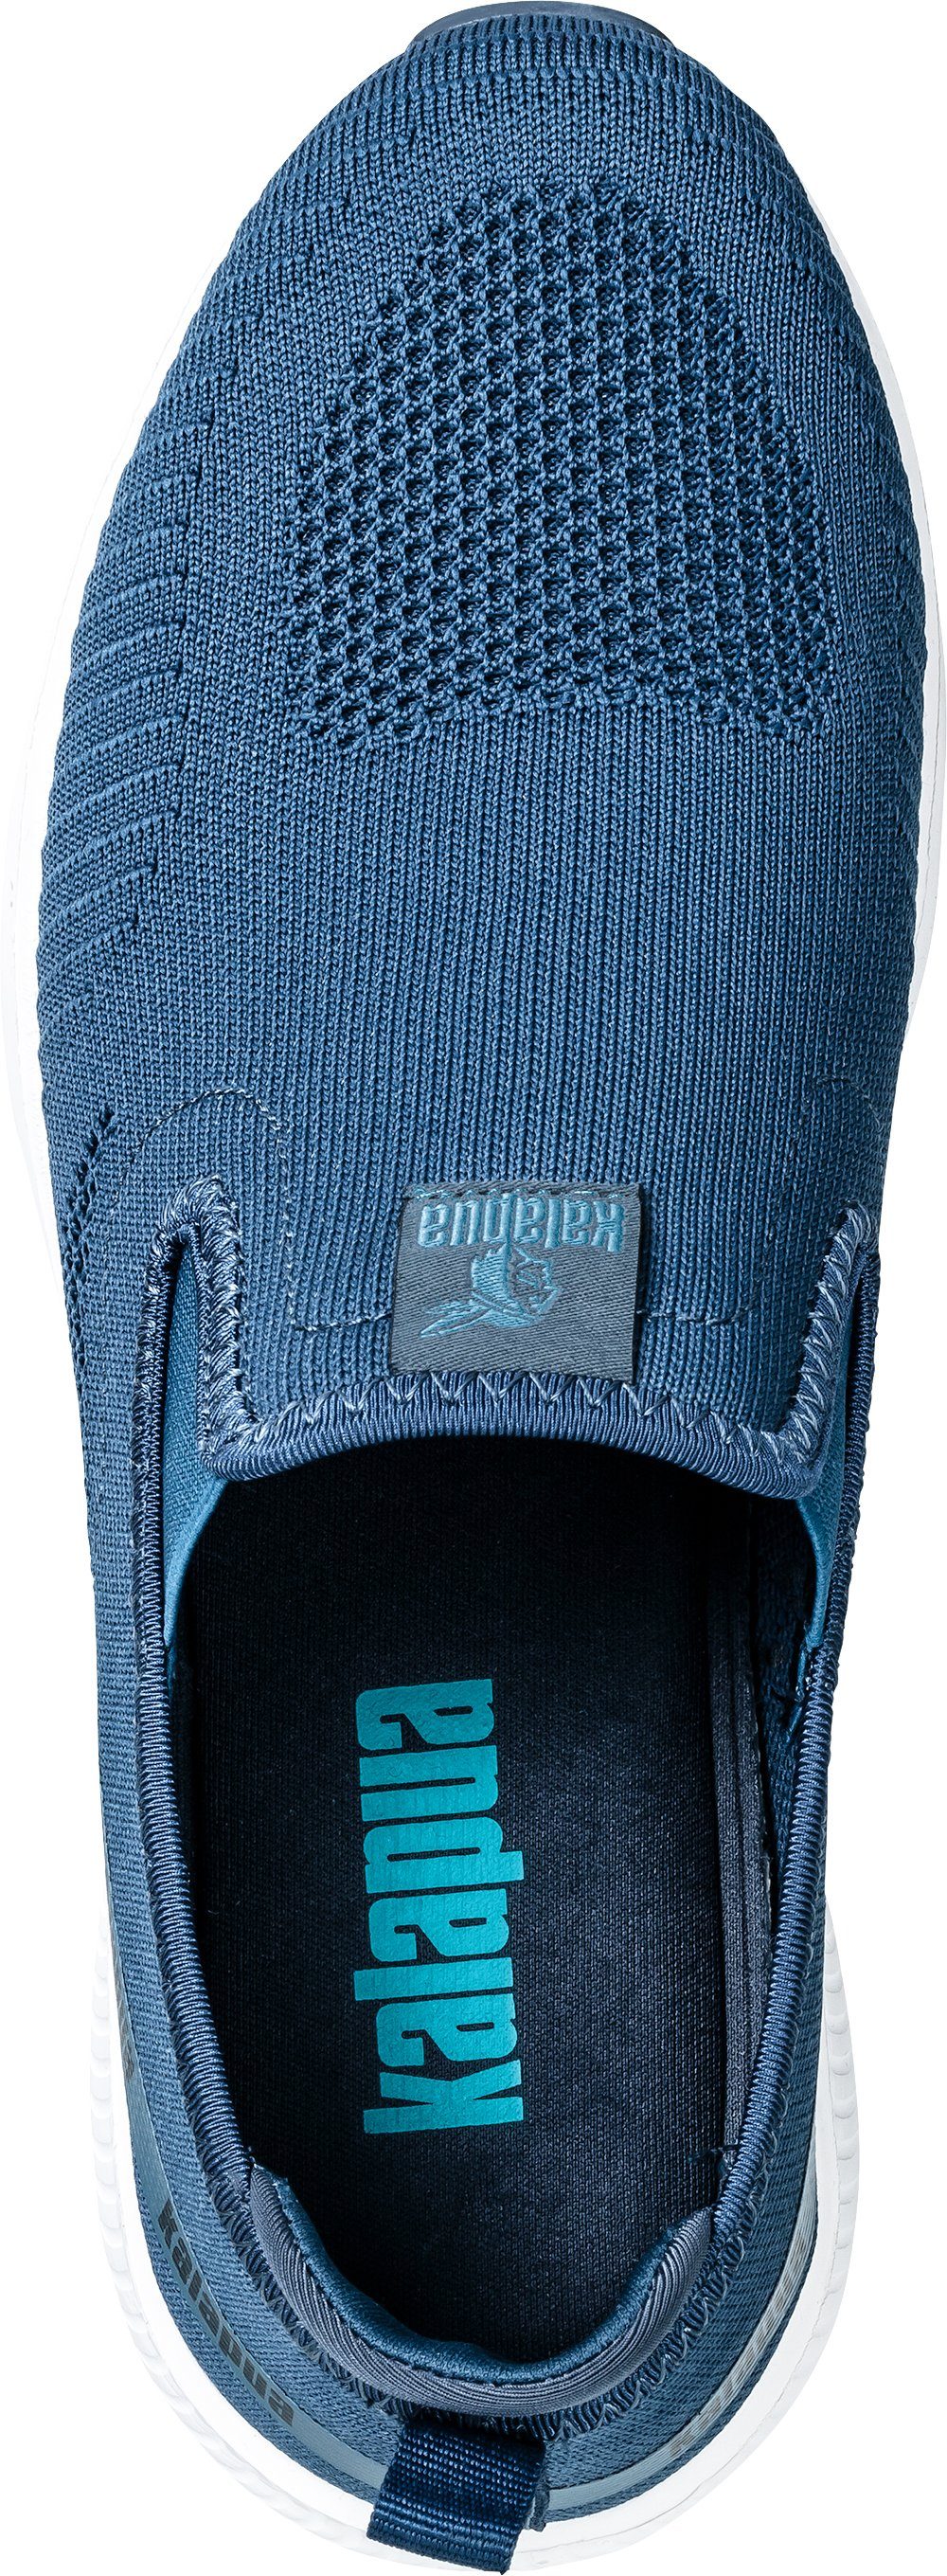 blau Slip-On mit Kalapua Memory-Foam-Innensohle und Sneaker ultraleicht